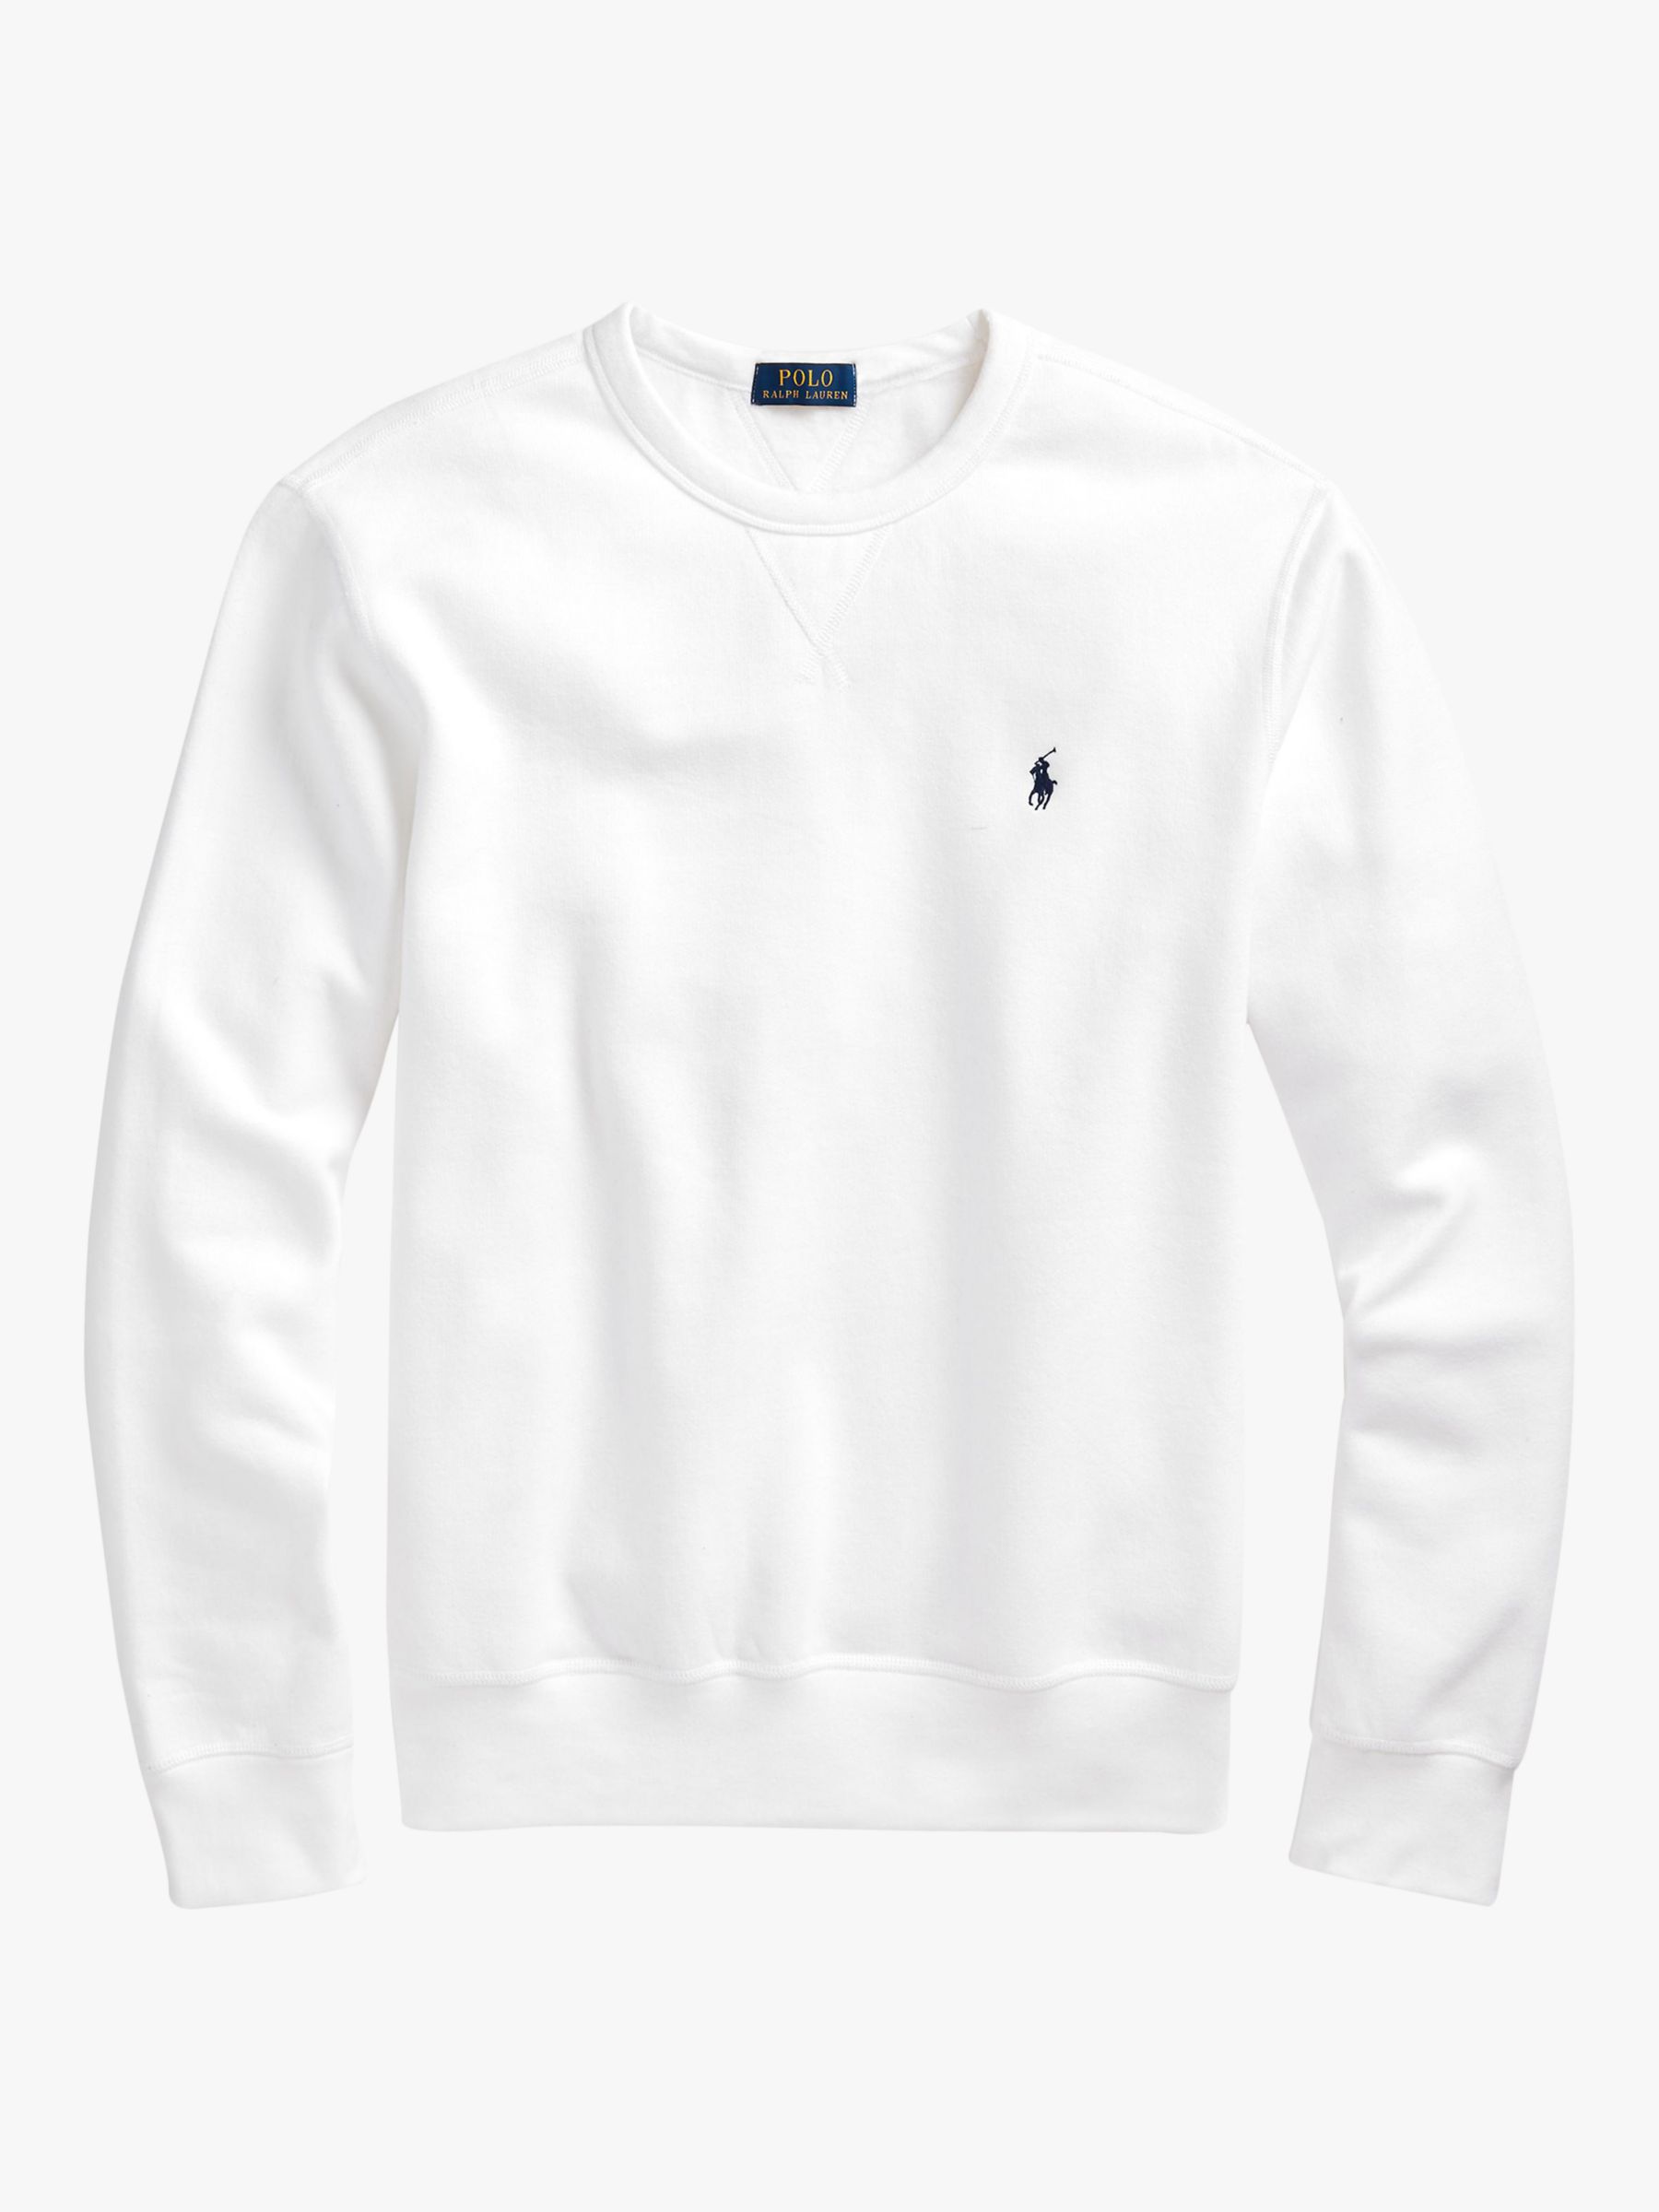 Polo Ralph Lauren Sweatshirt, White at John Lewis & Partners